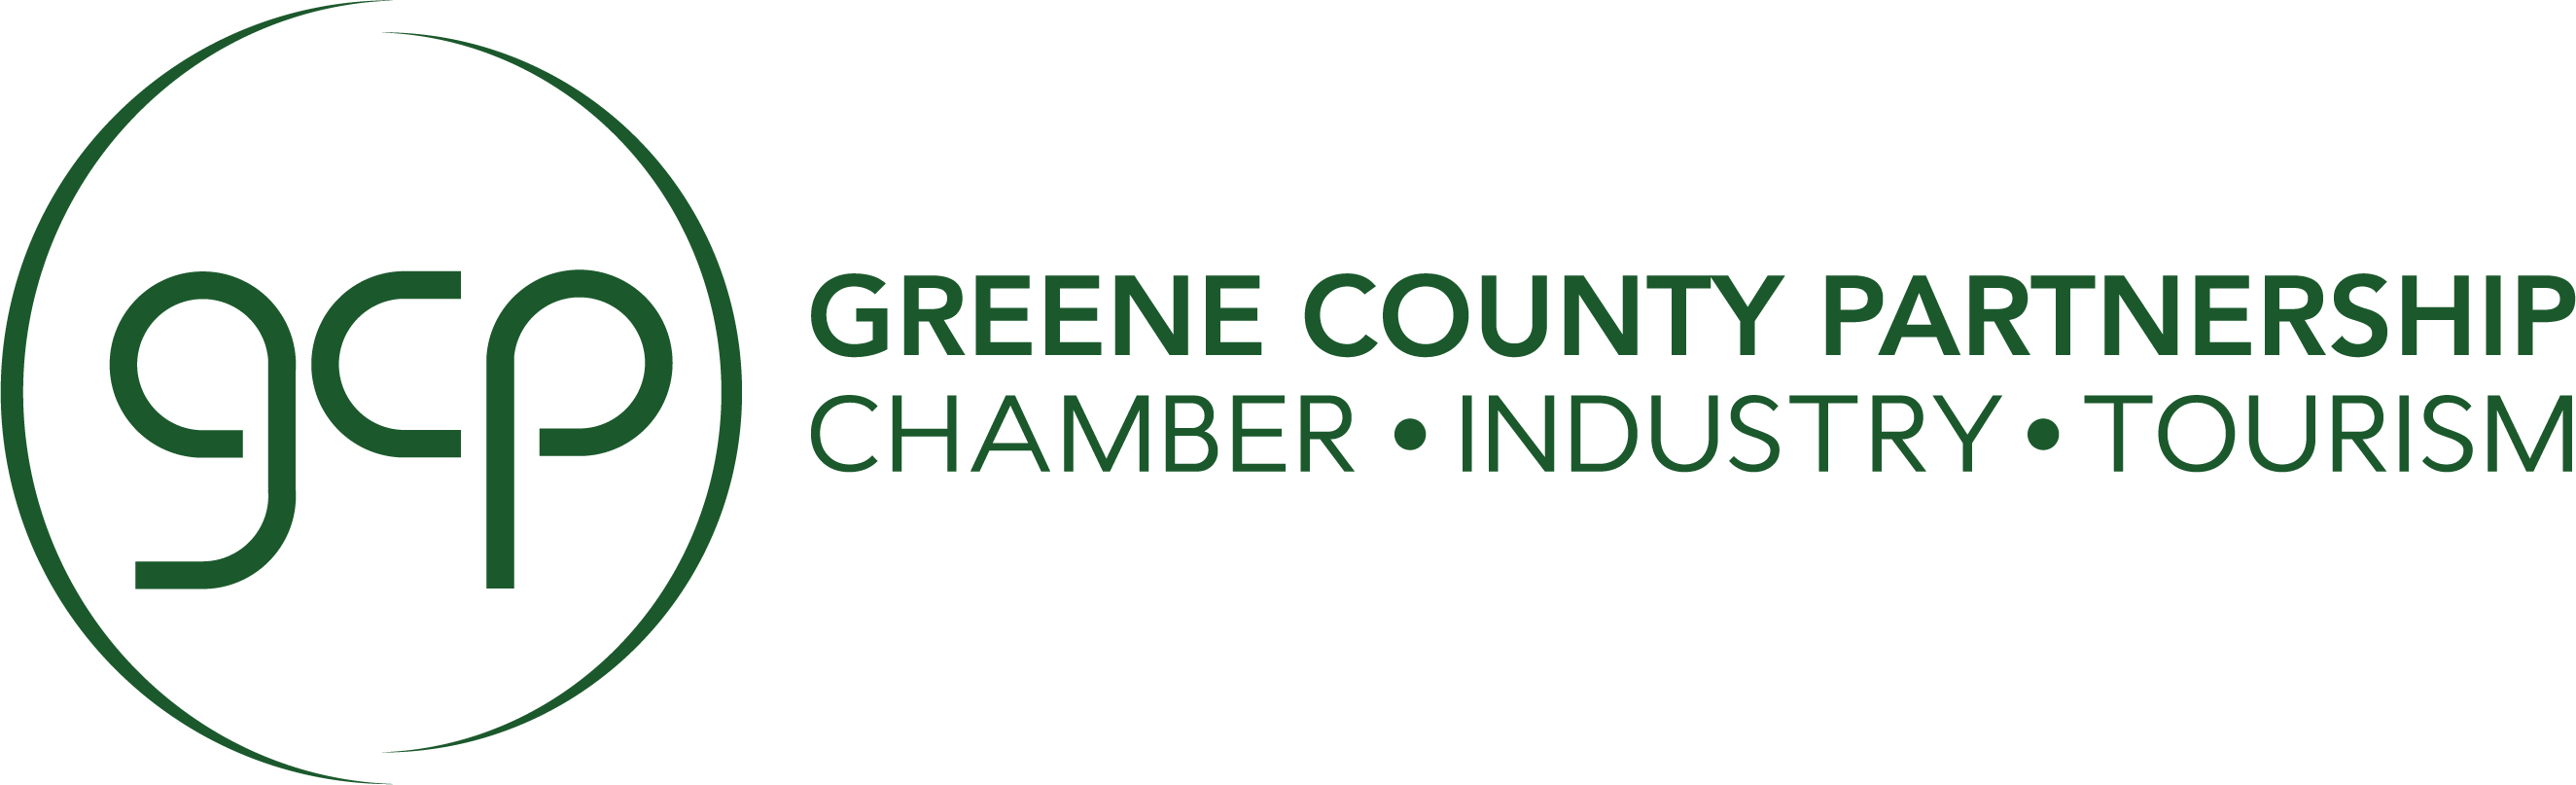 Greene County Partnership